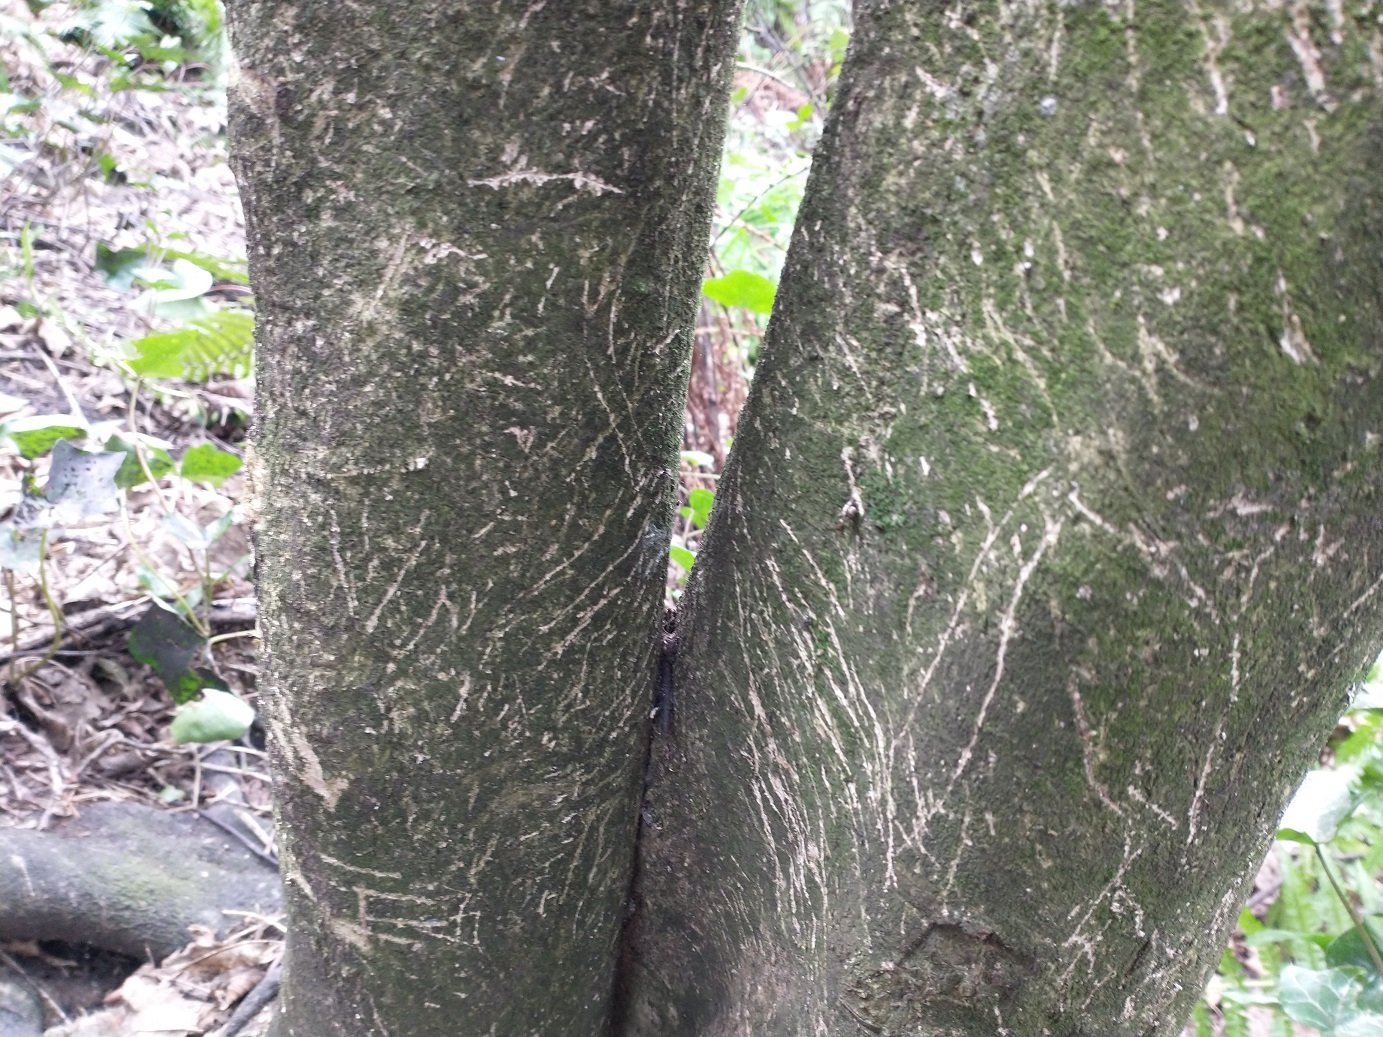 Scratch marks on a tree